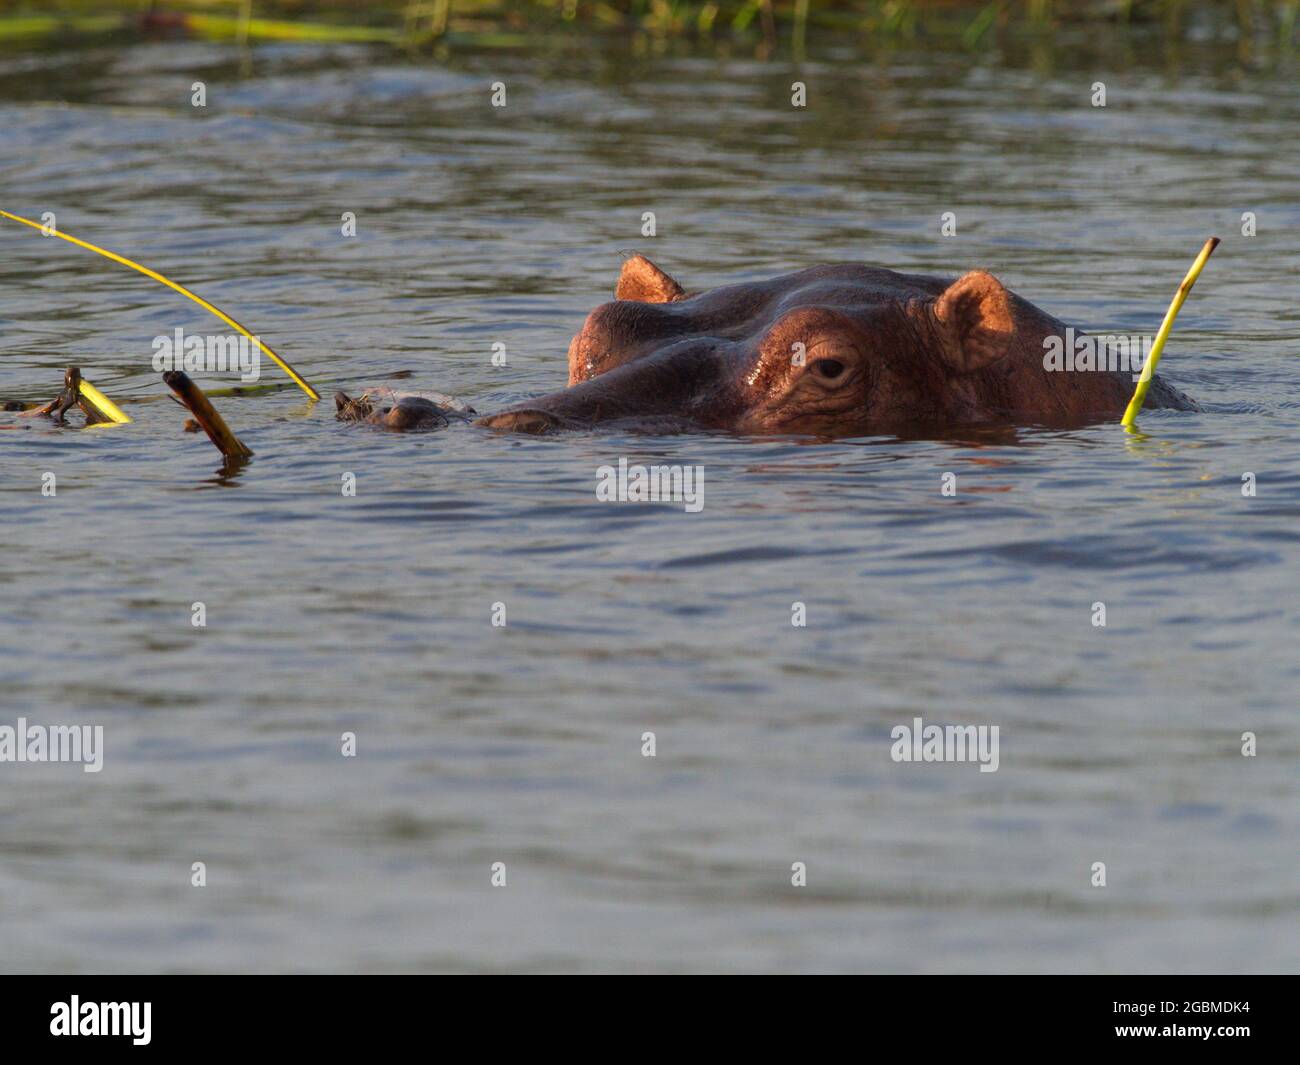 Closeup side on portrait of Hippopotamus (Hippopotamus amphibius) head floating in water focusing on eye Lake Awassa, Ethiopia. Stock Photo